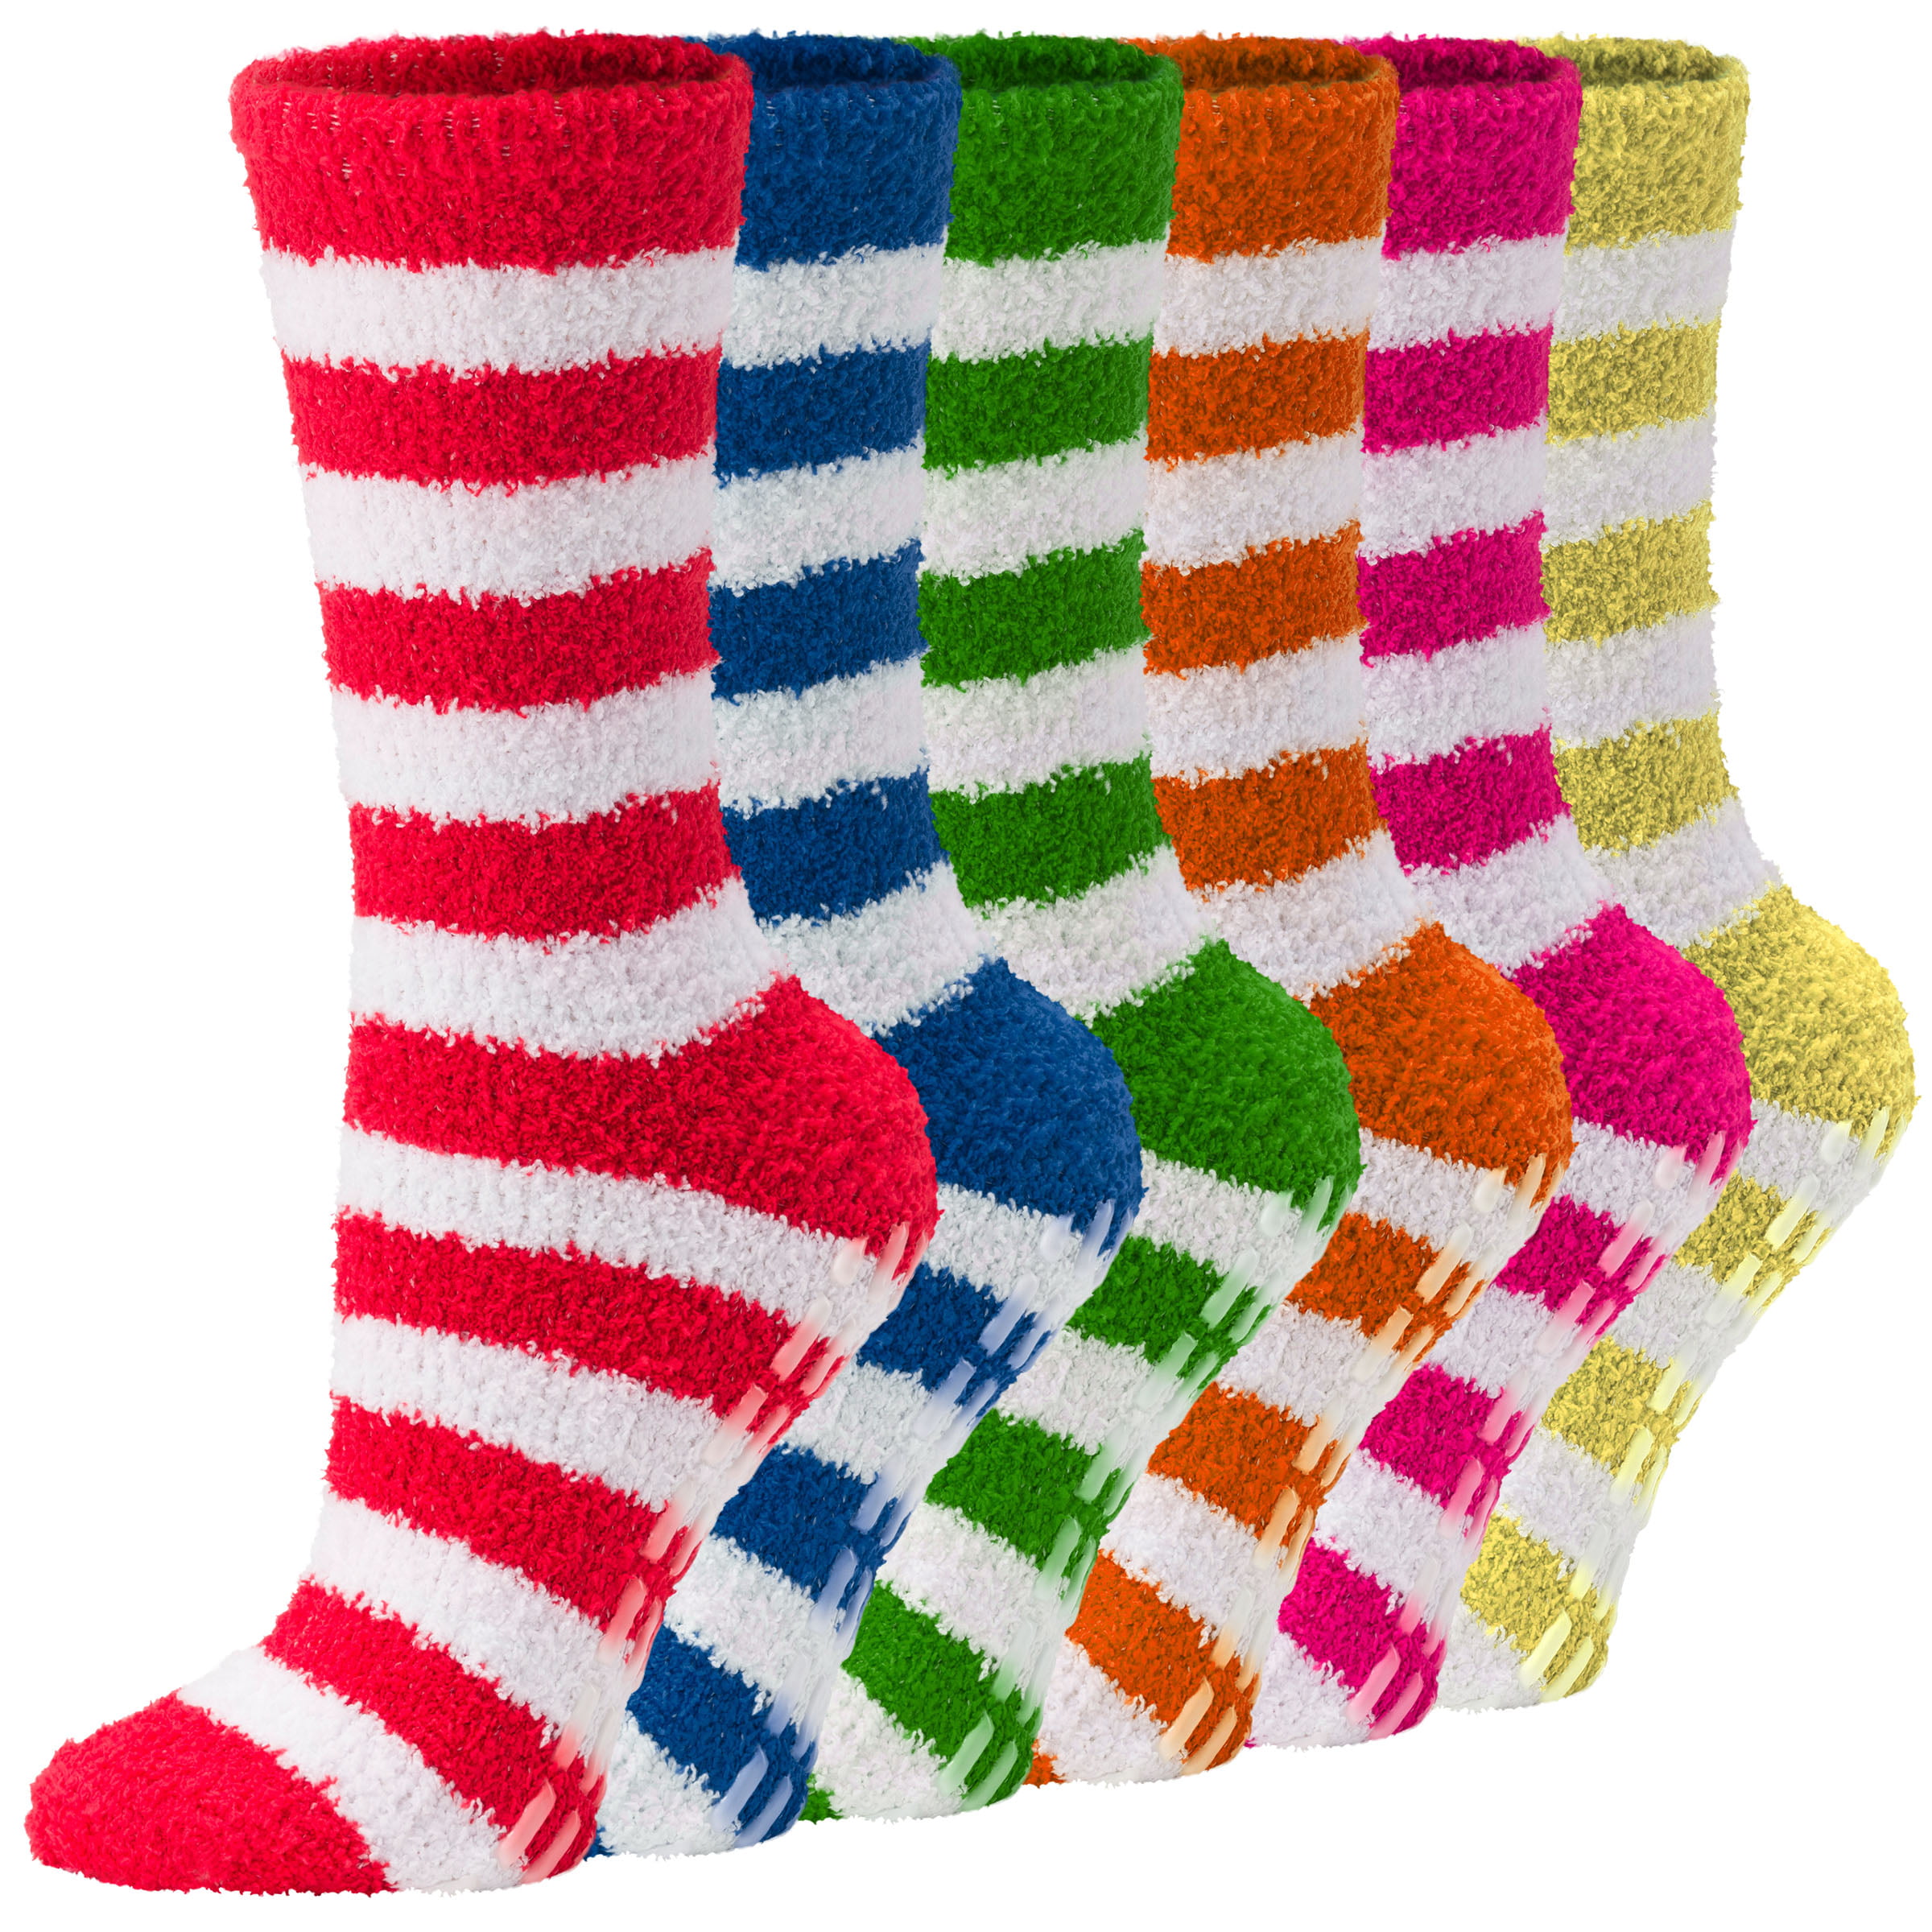 Neeseelily 3 Pairs Christmas Womens Girls Fuzzy Cute Cozy Slipper Socks Soft Warm Animals Winter Socks 